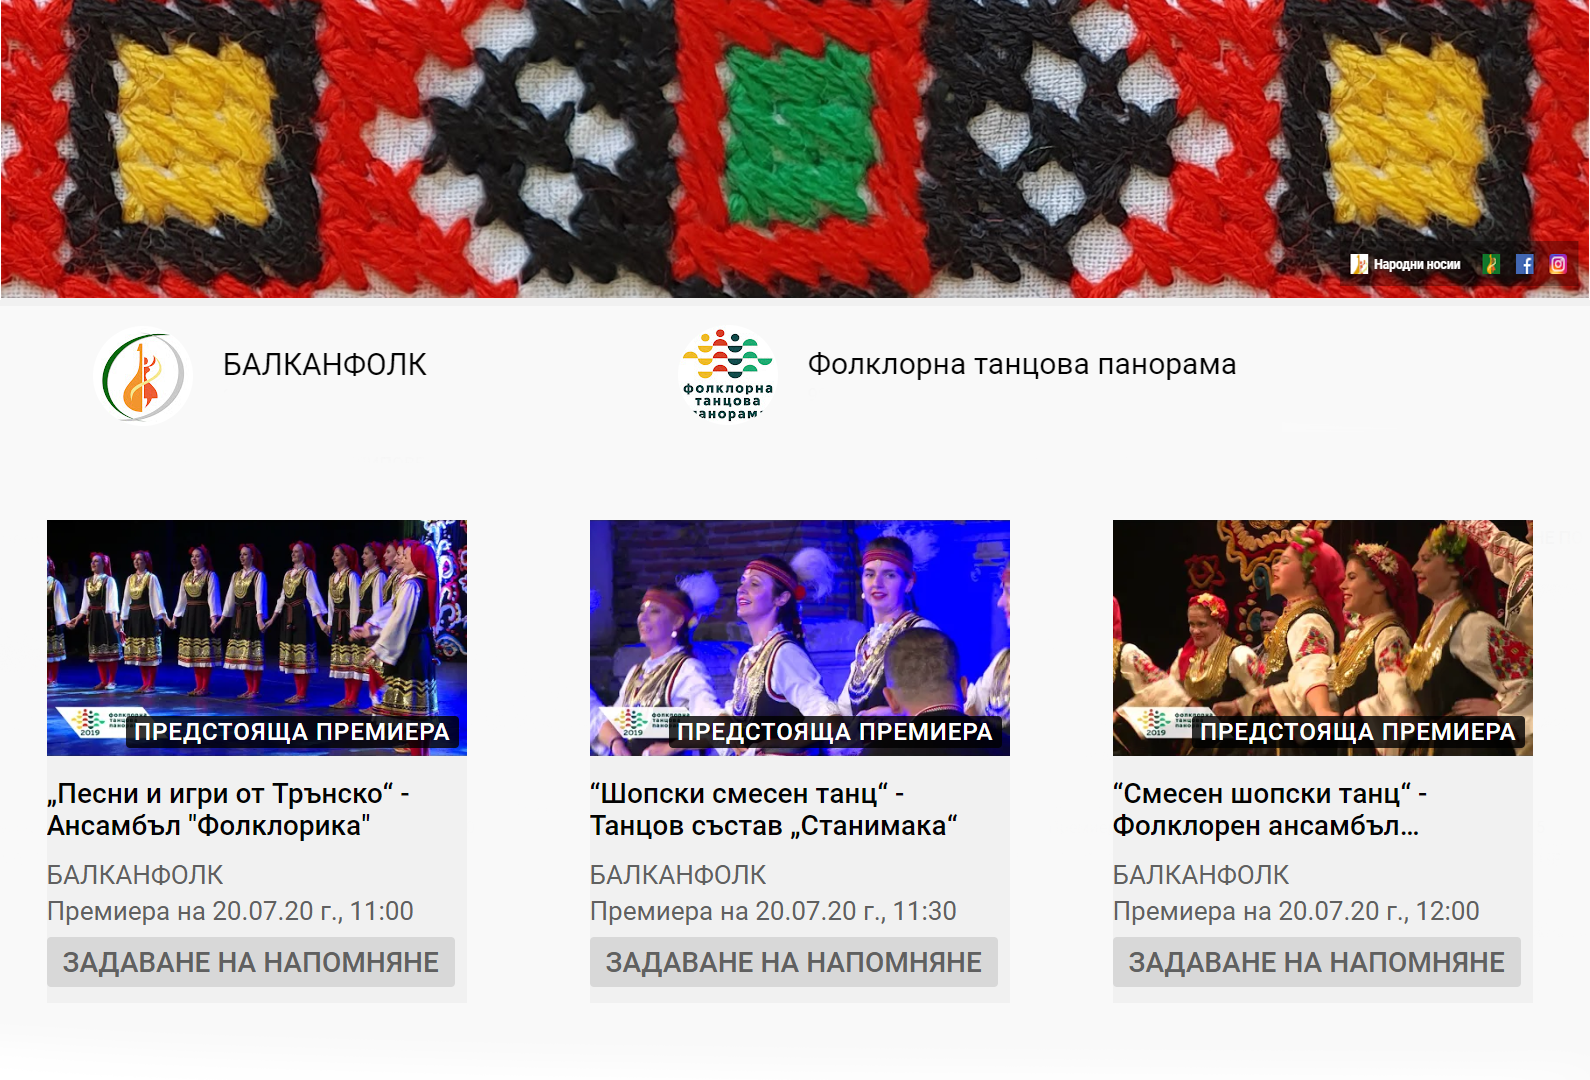 Bulgarian Folklore Ensembles Folklorika, Stanimaka, Ognenite